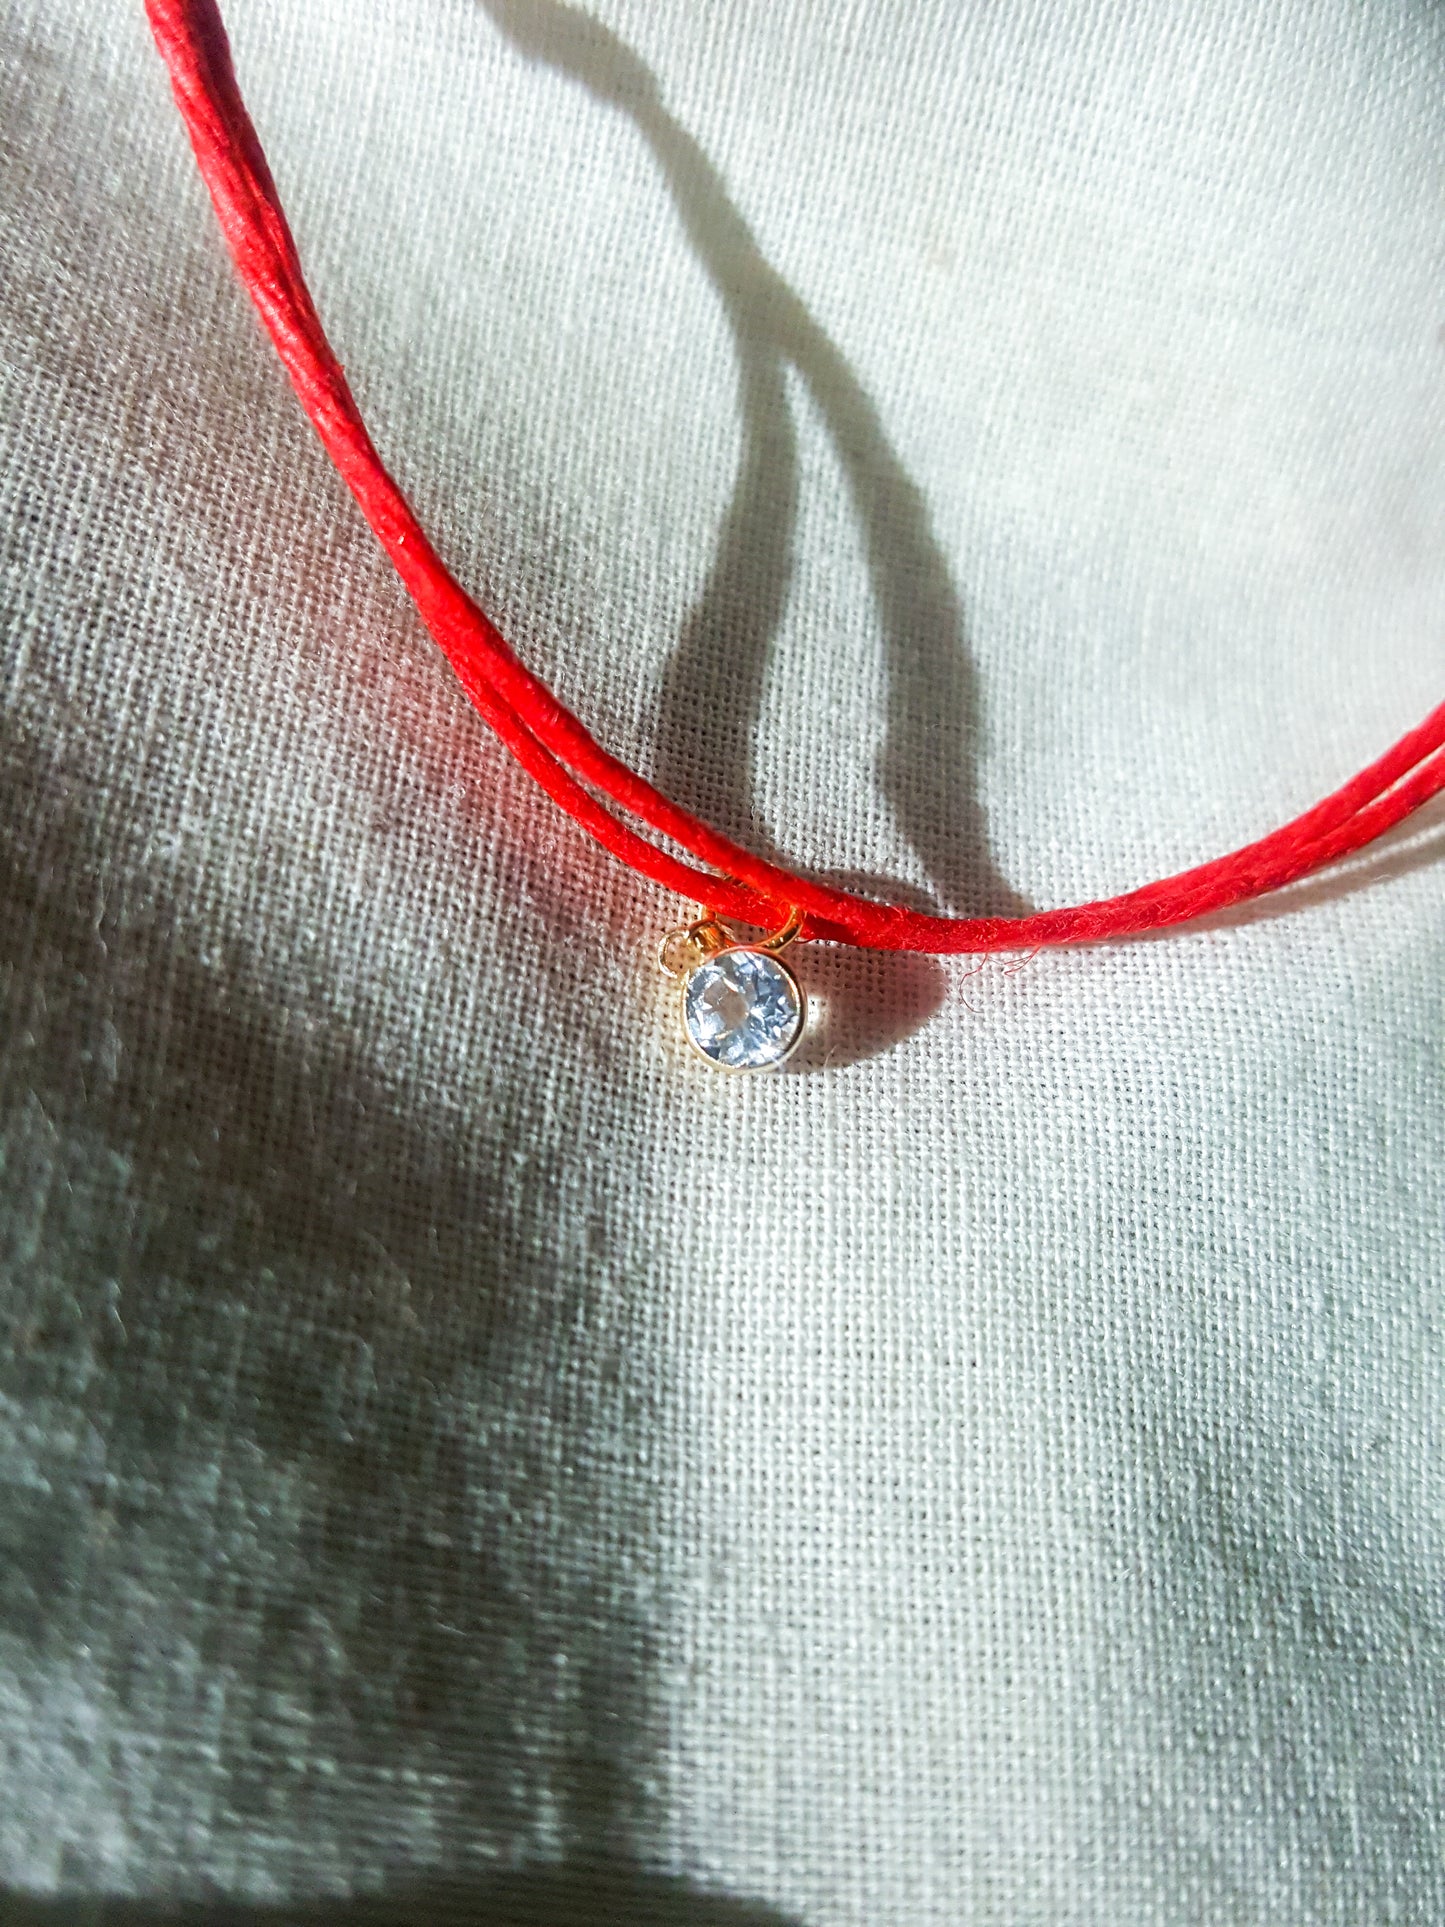 SELF LOVE 14K Solid Gold with White Topaz Red String Bracelet | Minimalist Handmade Boho | Vegan (not silk), Hemp twine. April birthstone